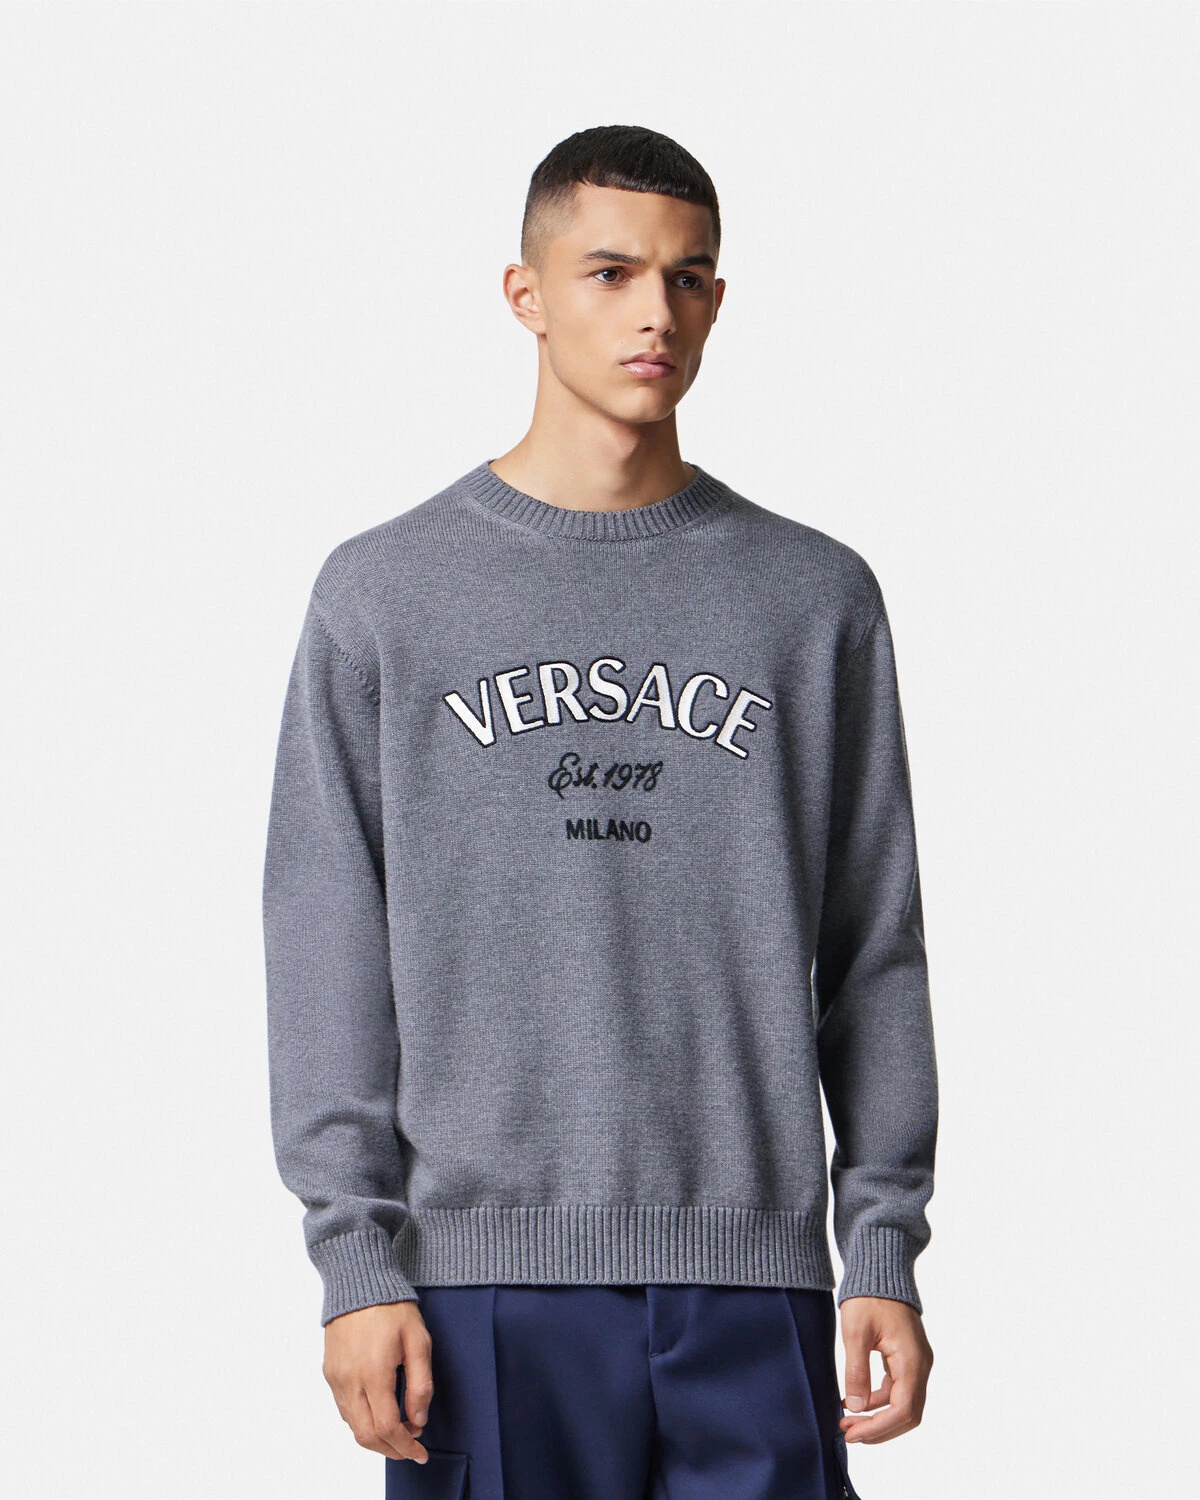 Versace Milano Stamp Sweater - 4